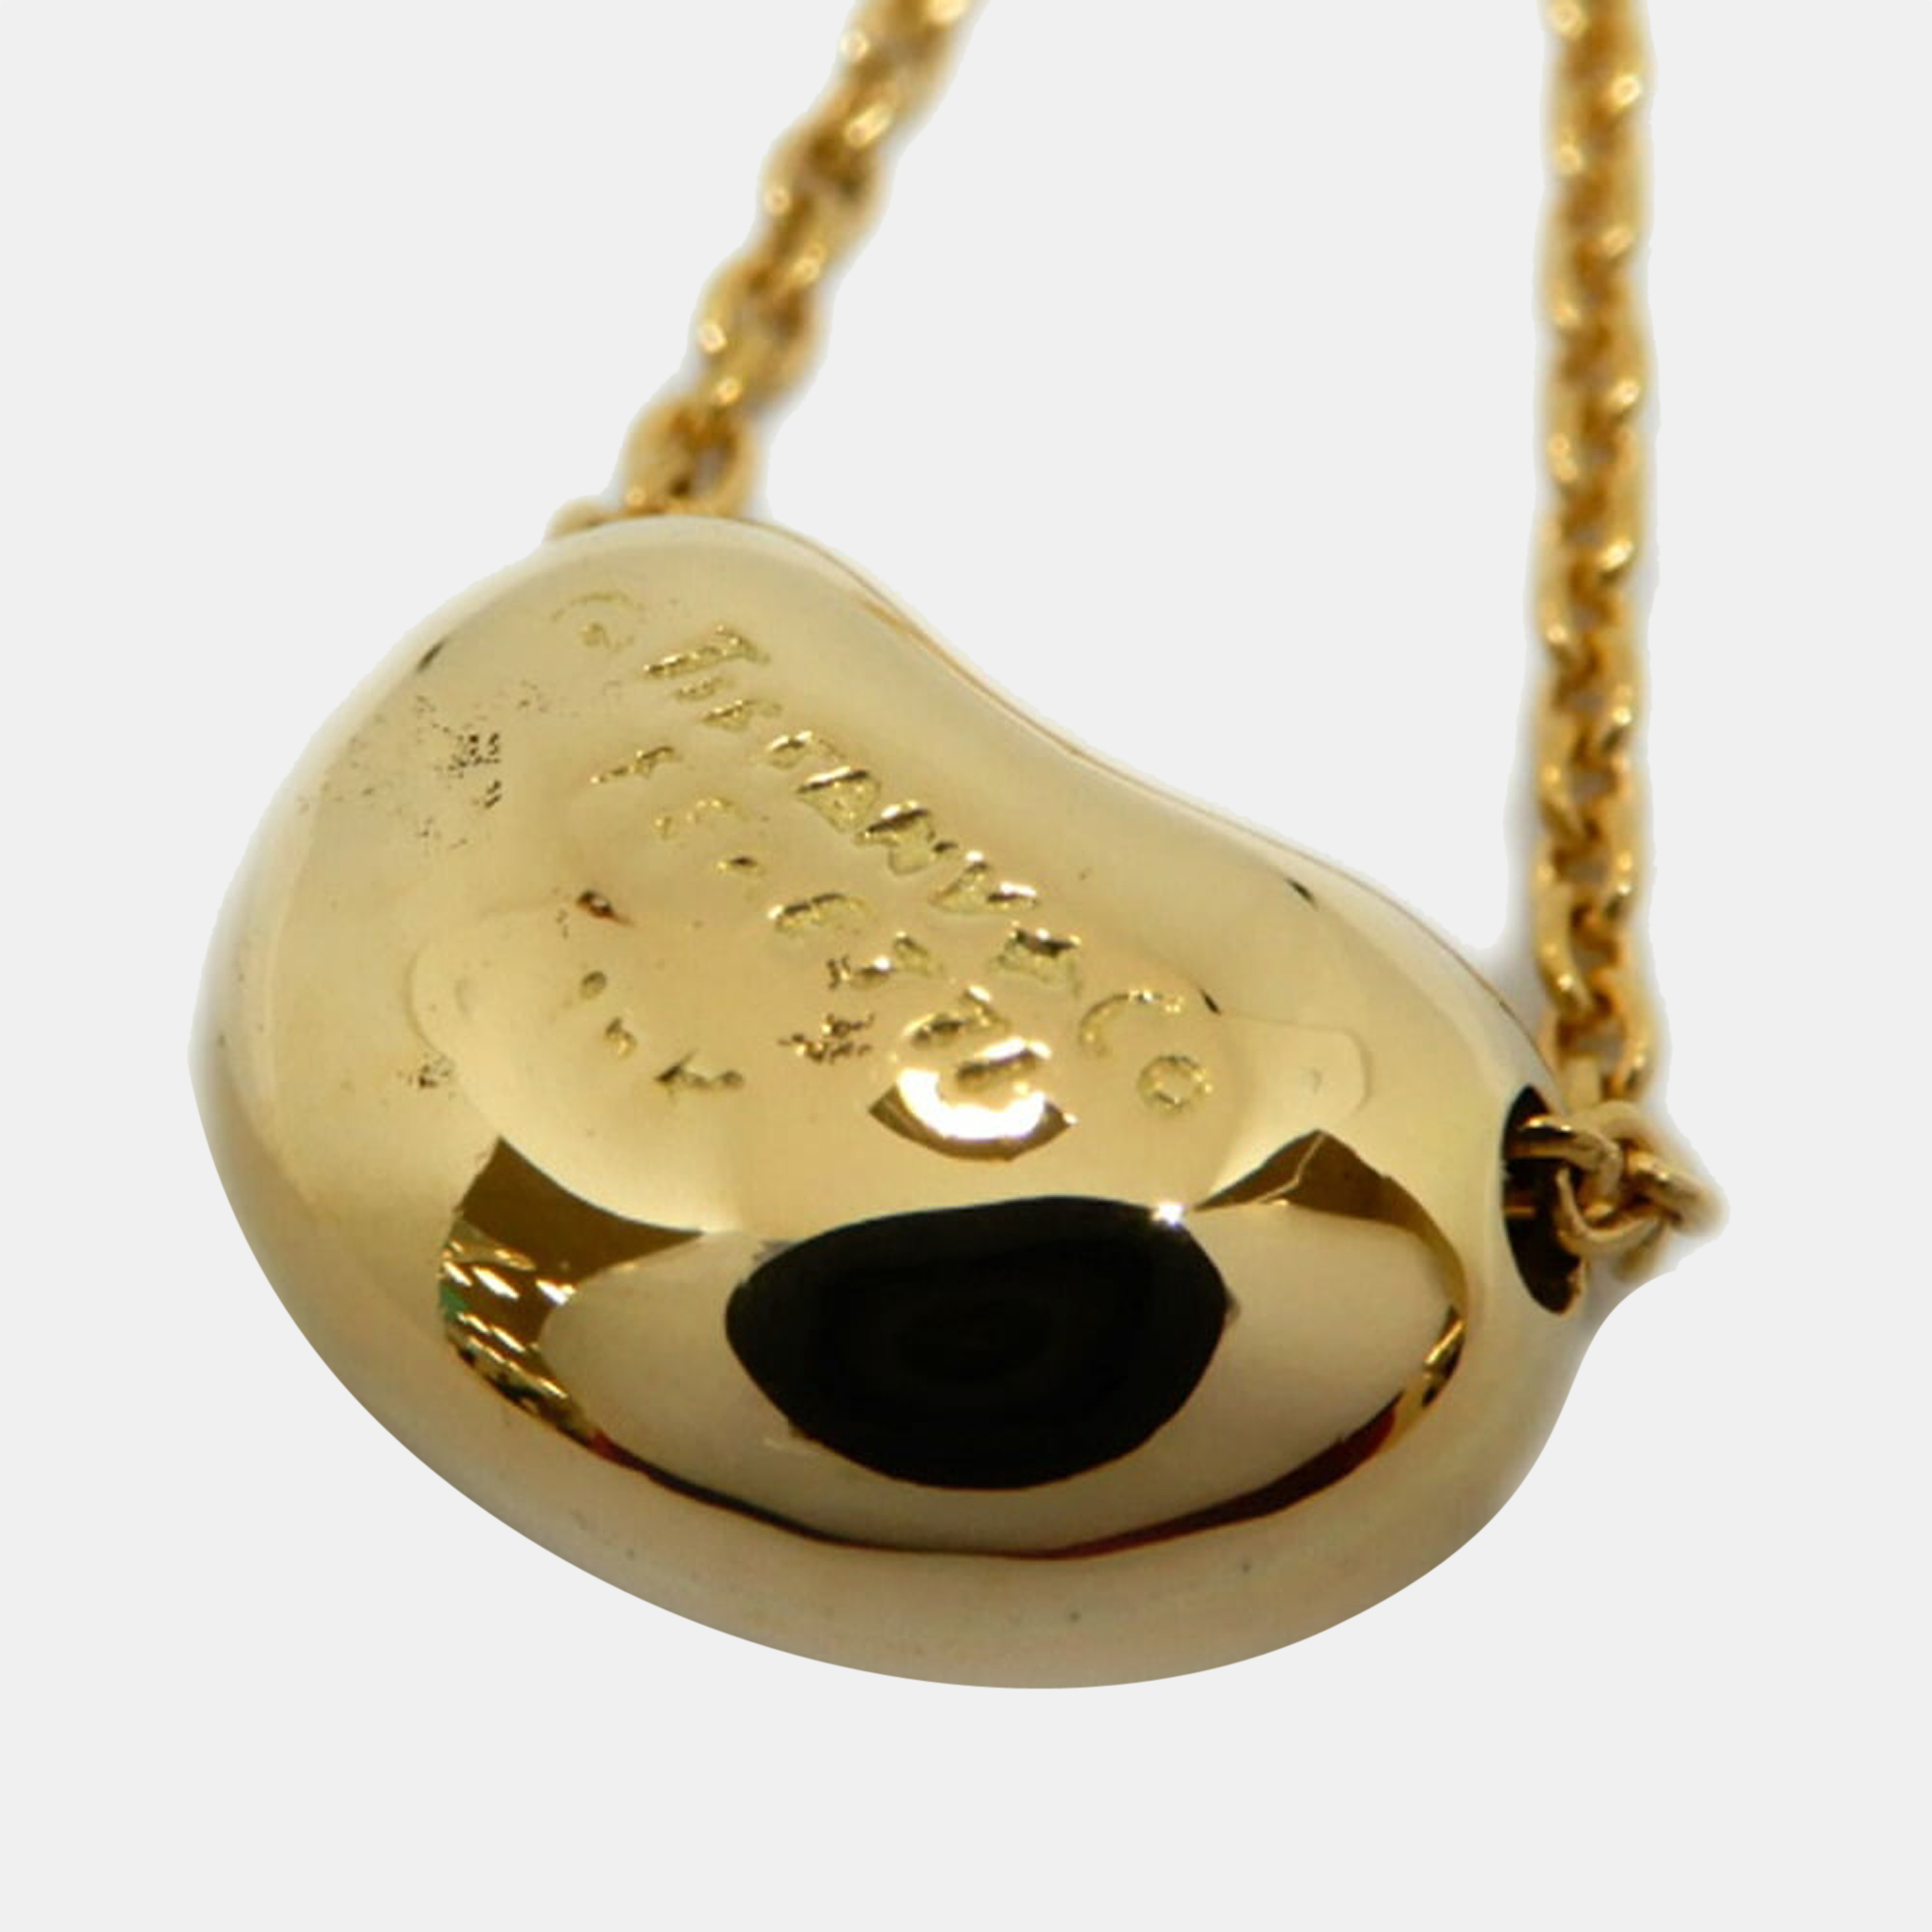 

Tiffany & Co. Elsa Peretti Bean 18K Yellow Gold Necklace